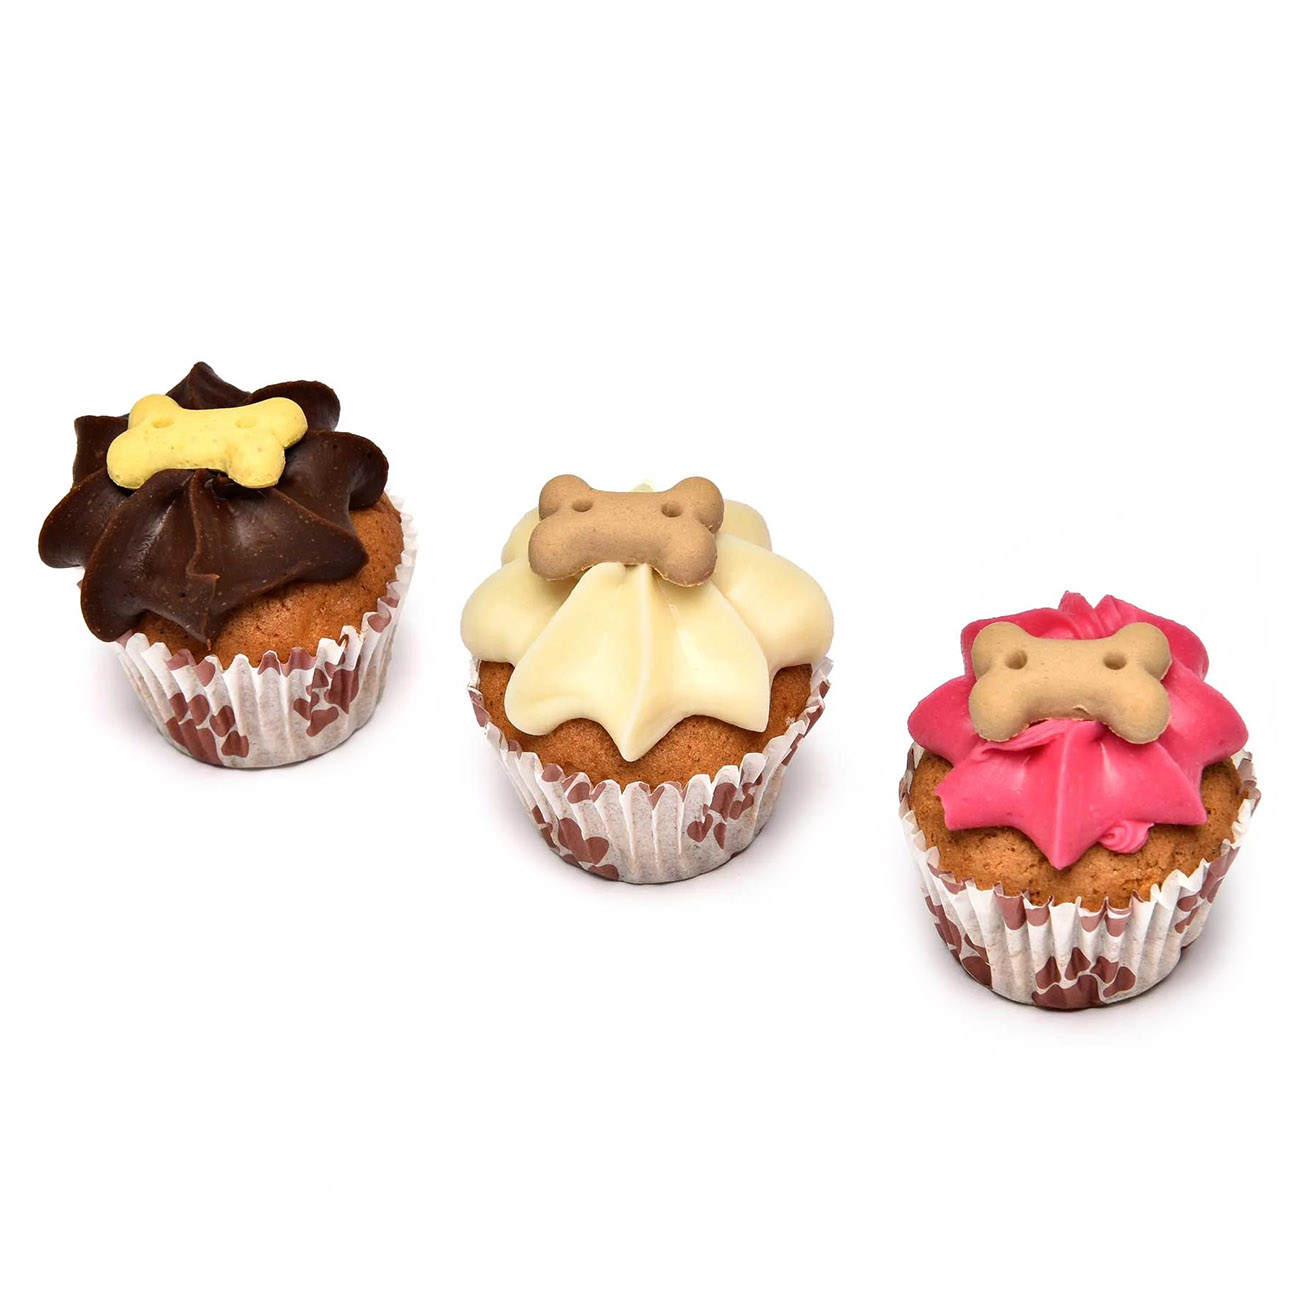 Trio Mini Cupcakes - Barking Bakery